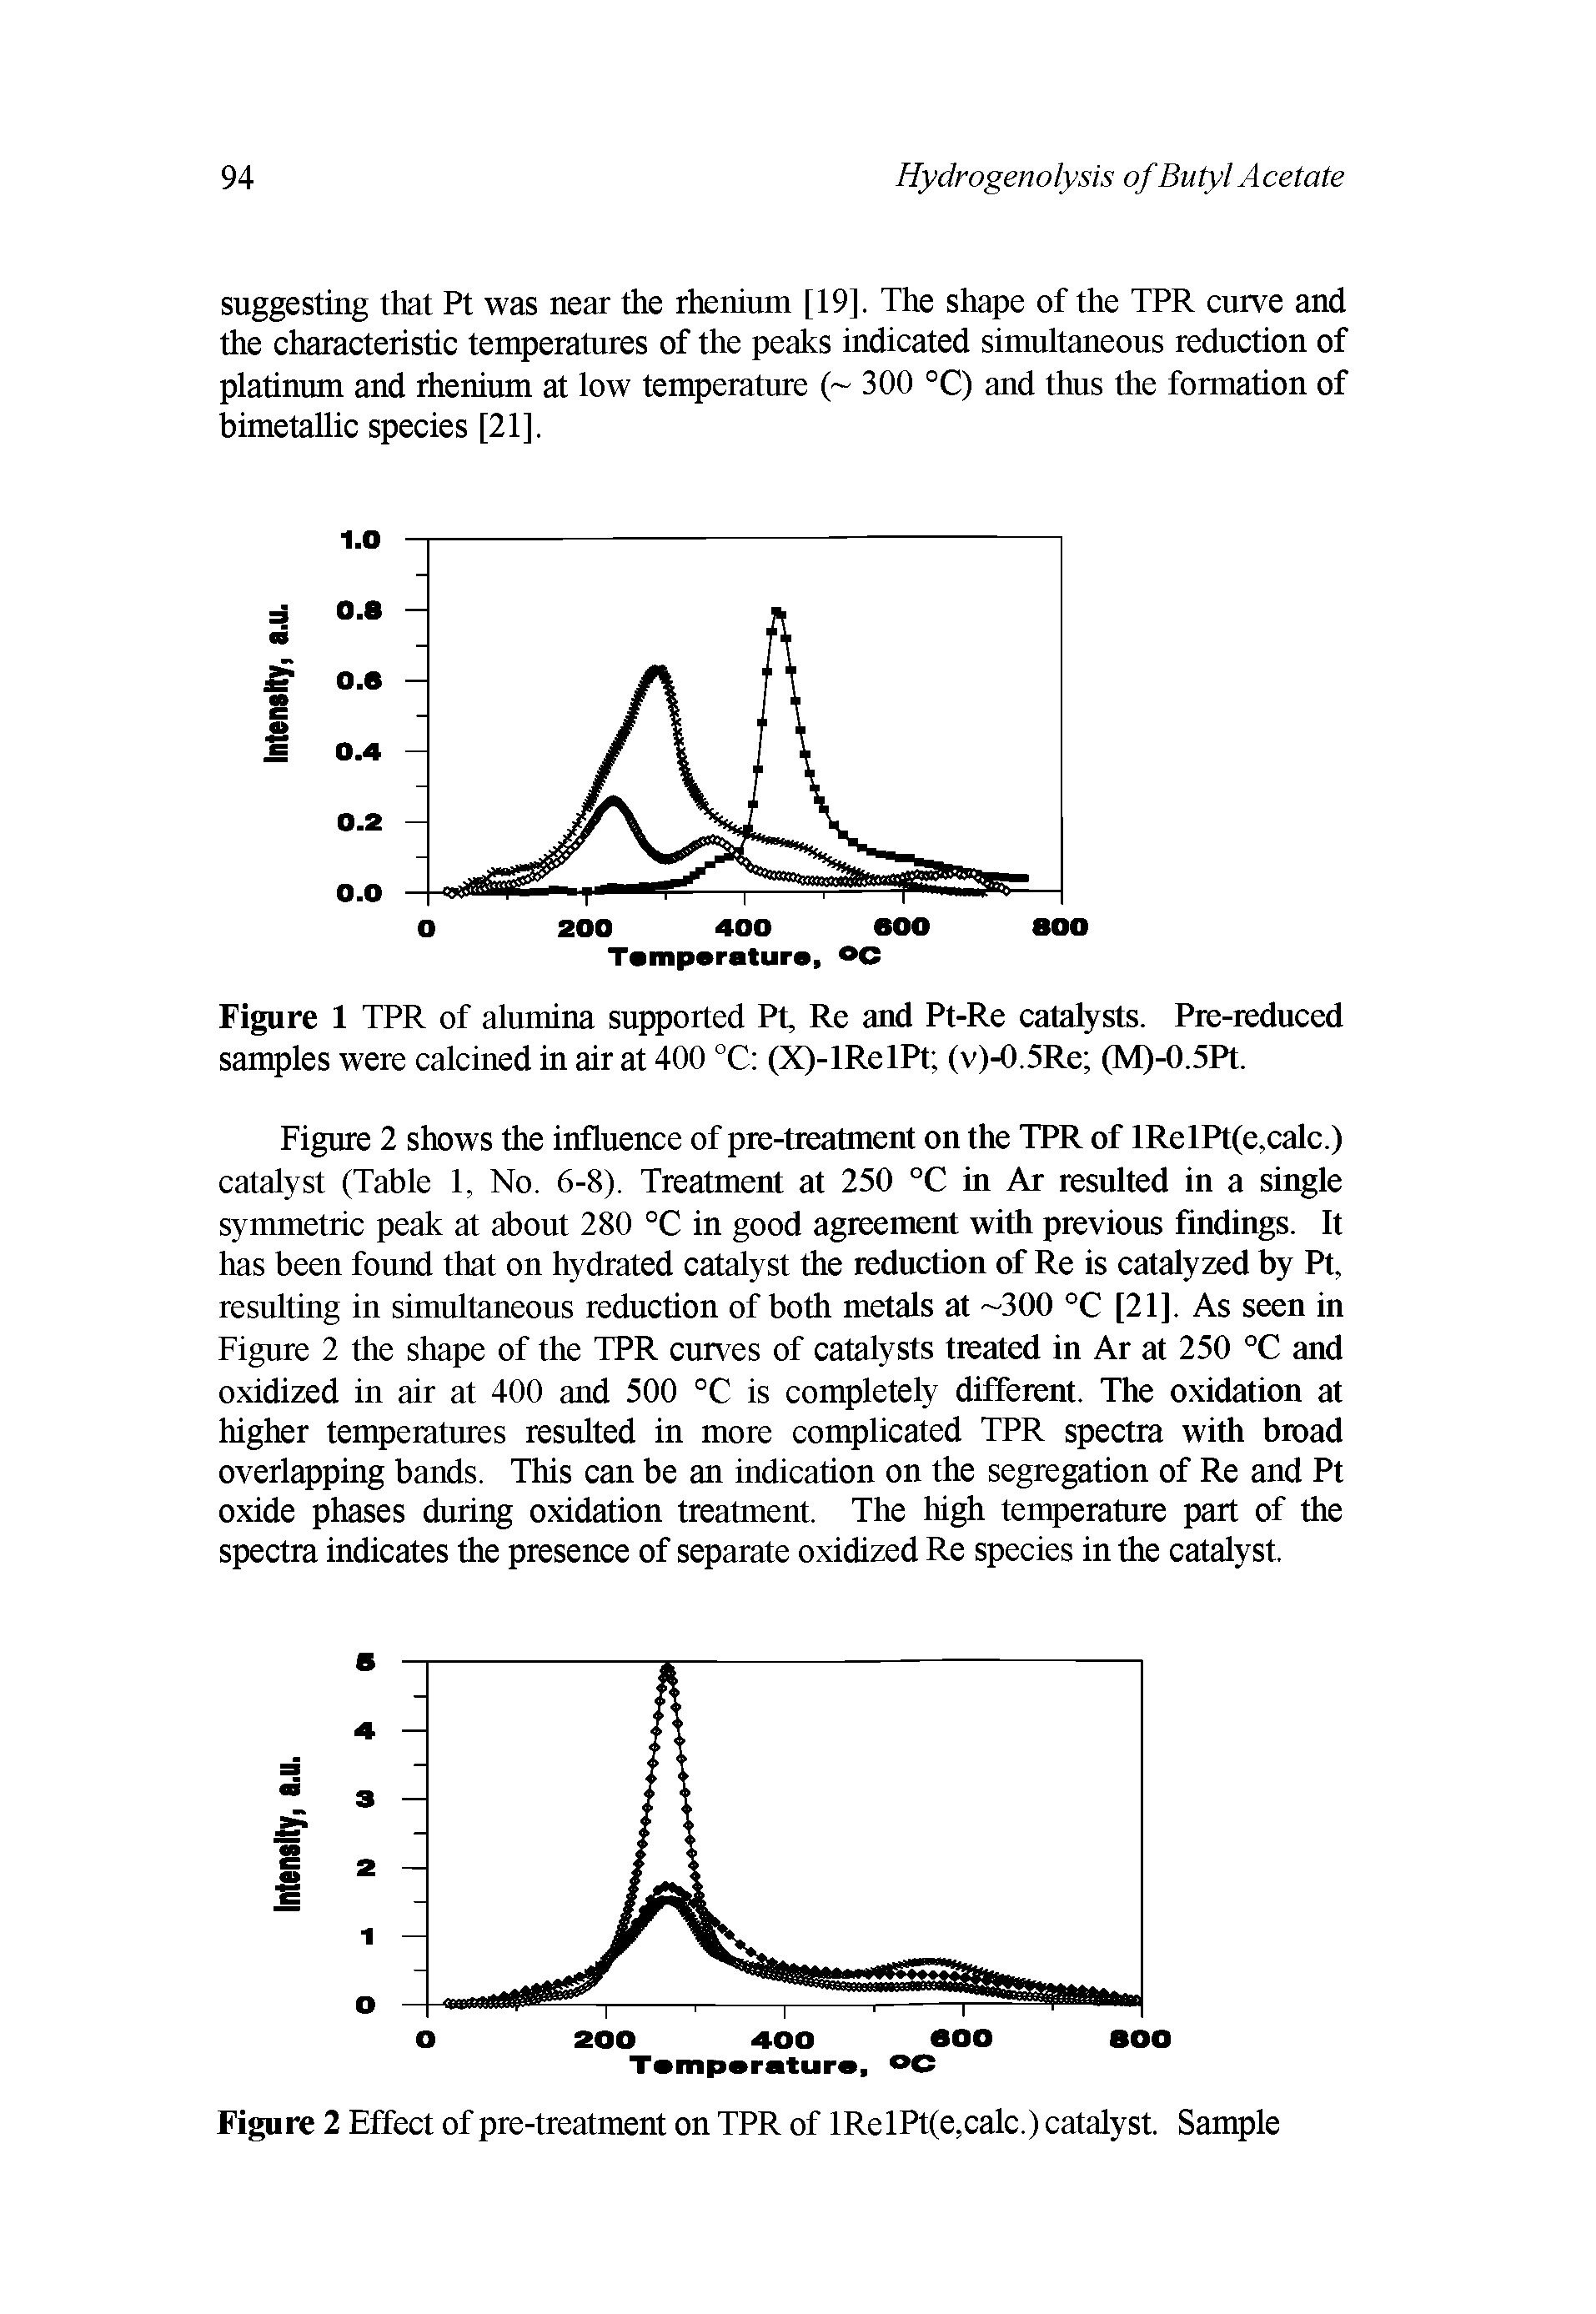 Figure 2 Effect of pre-treatment on TPR of lRelPt(e,calc.) catalyst. Sample...